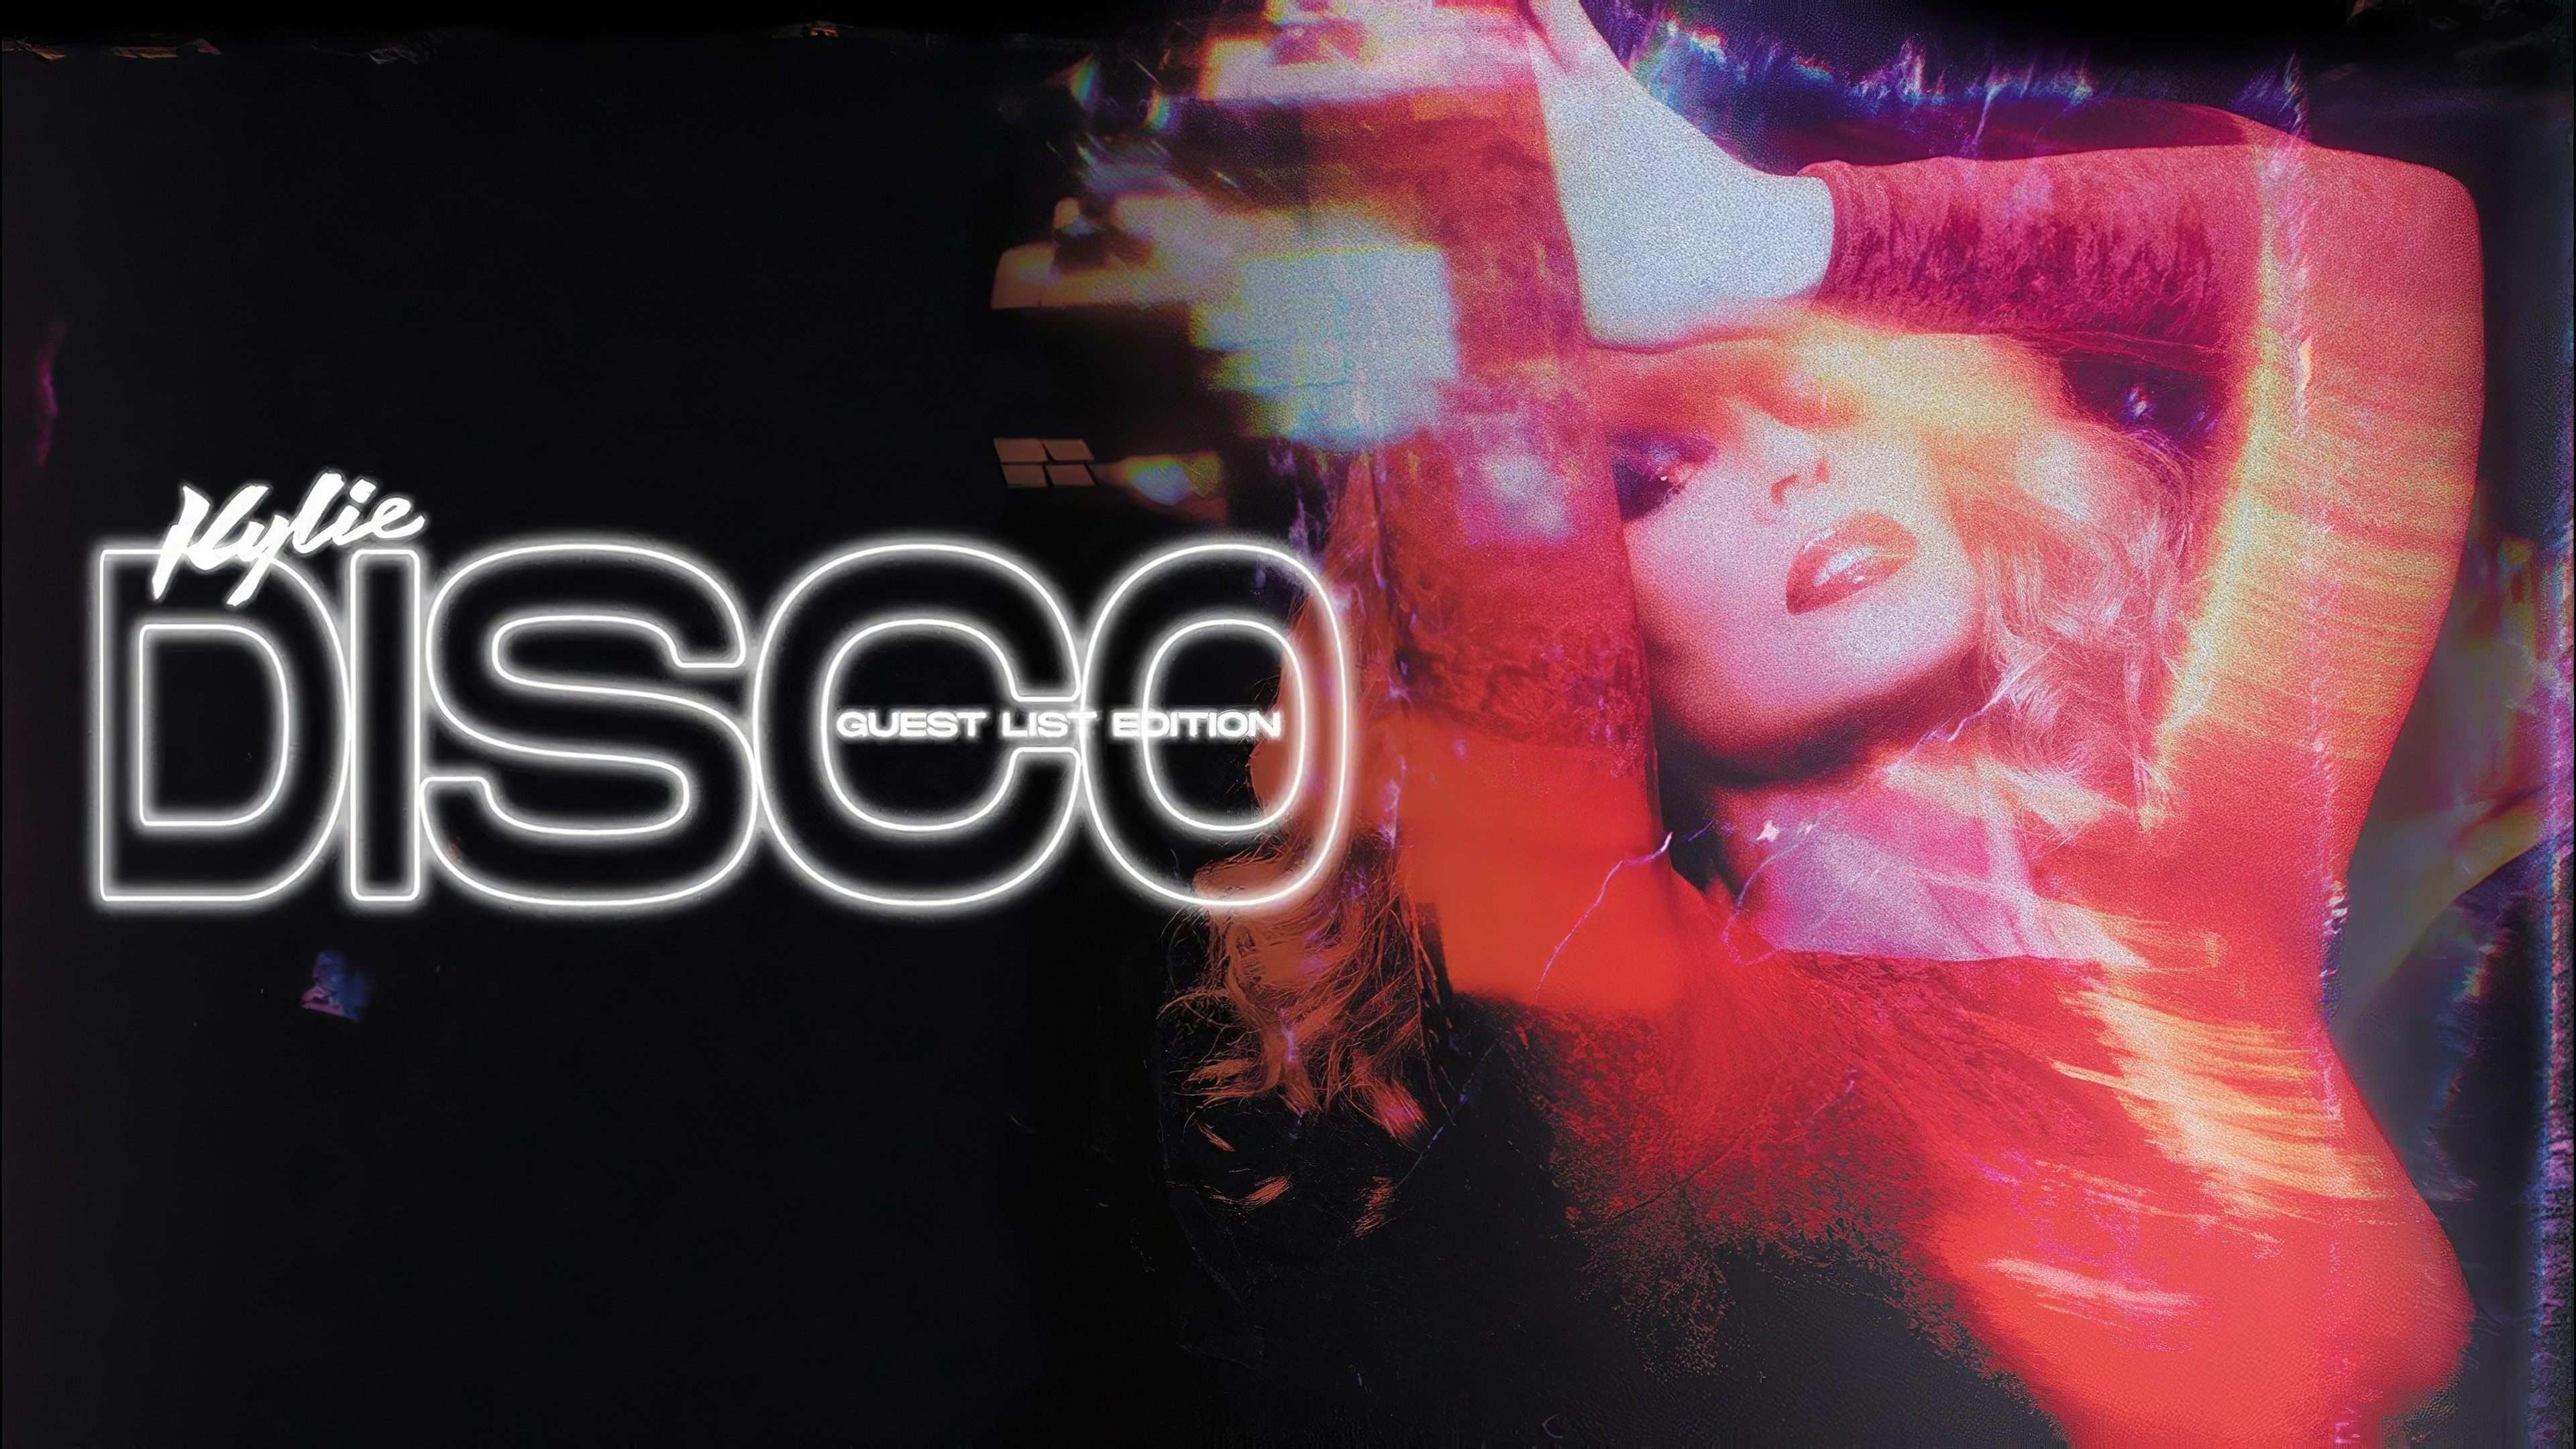 Kylie Minogue: DISCO - Guest List Edition backdrop